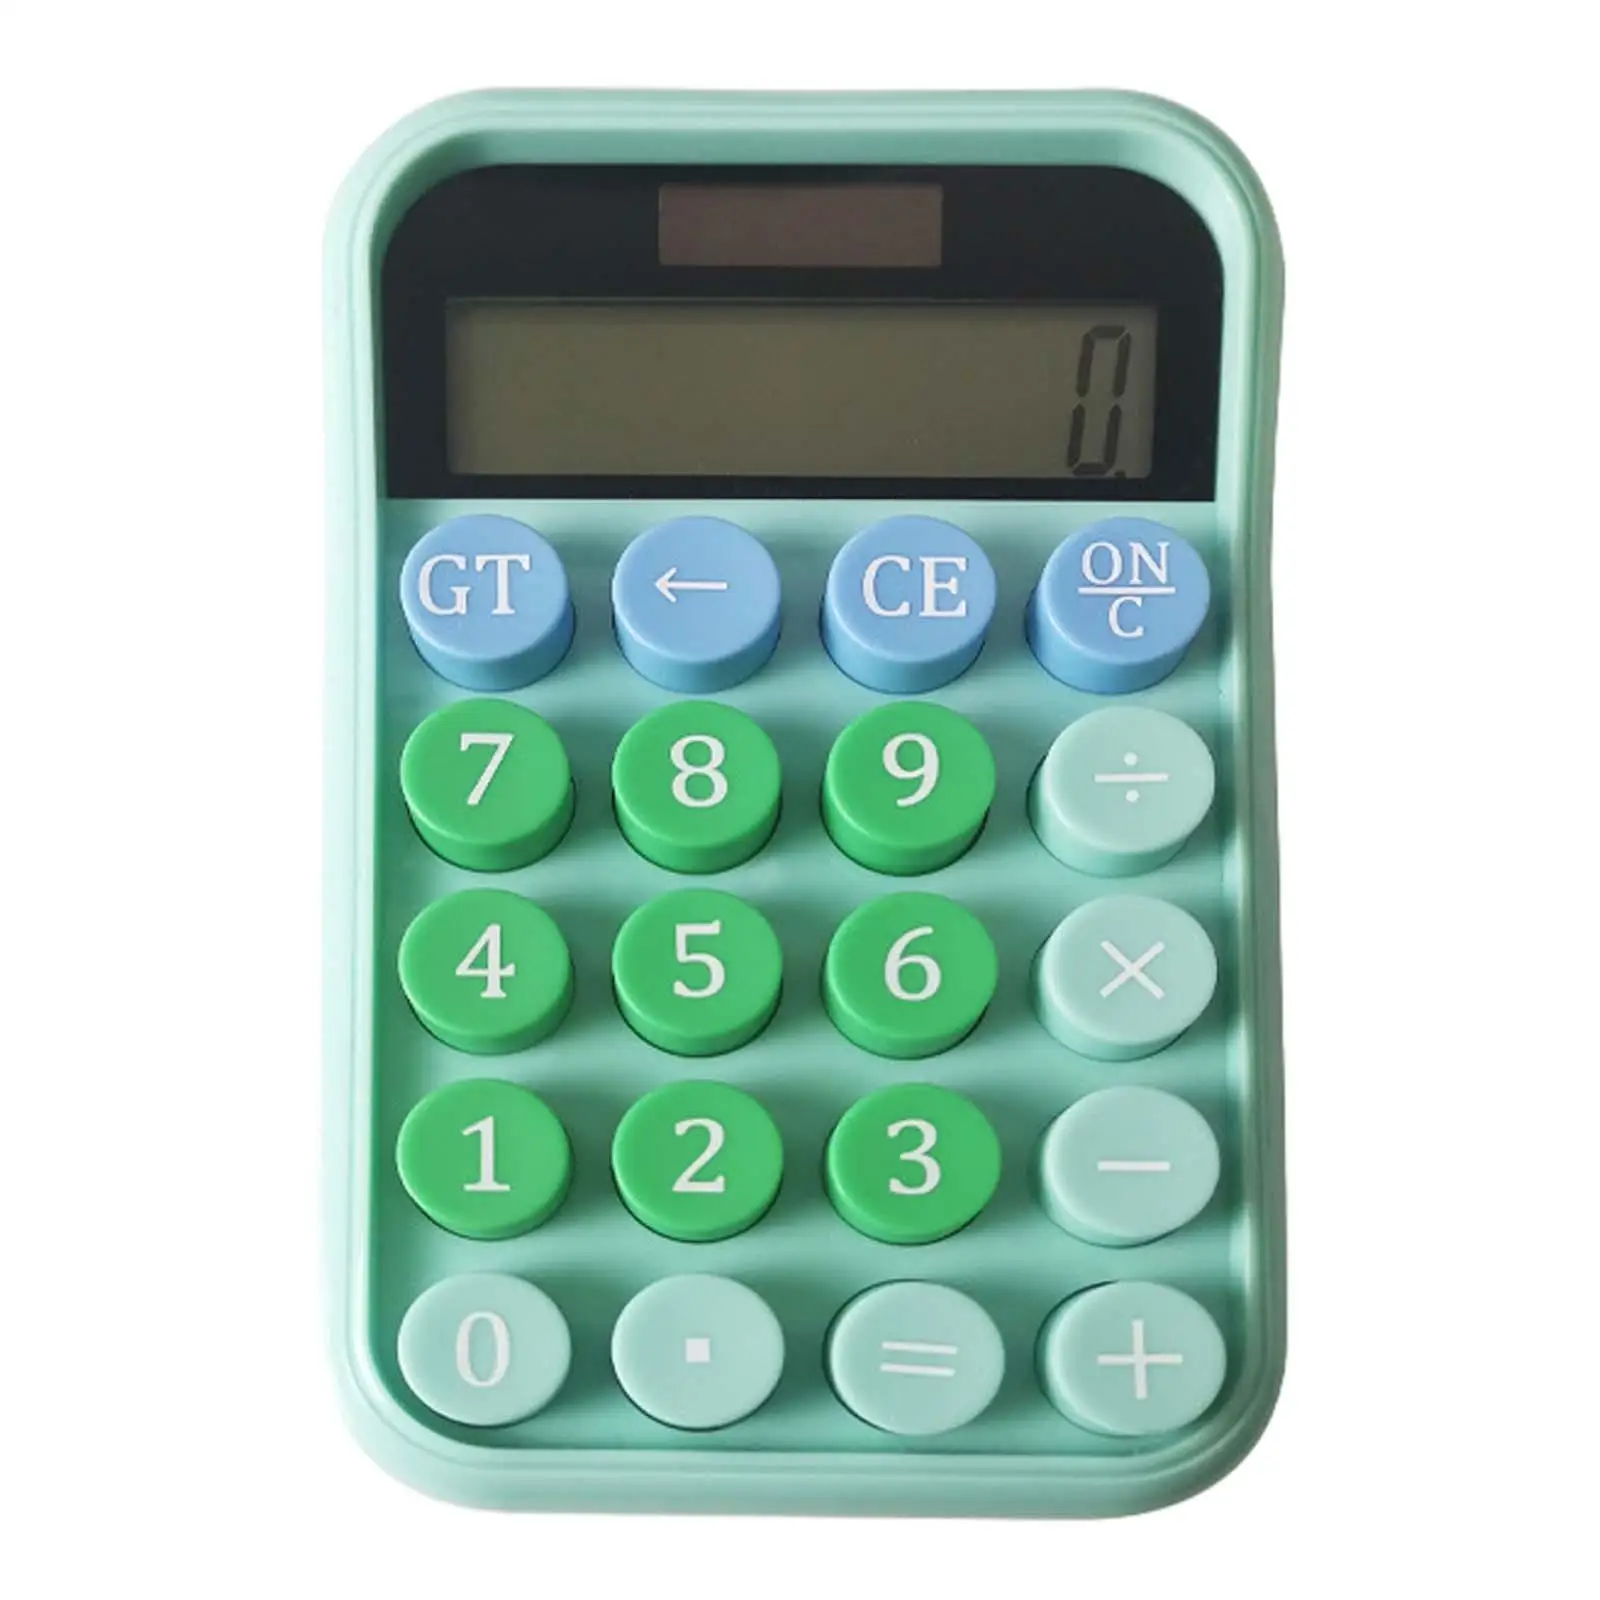 Cute Calculator Easy to Use Standard Function Solar Powered Calculator Mechanical Desktop Calculator for Office Home Kids School